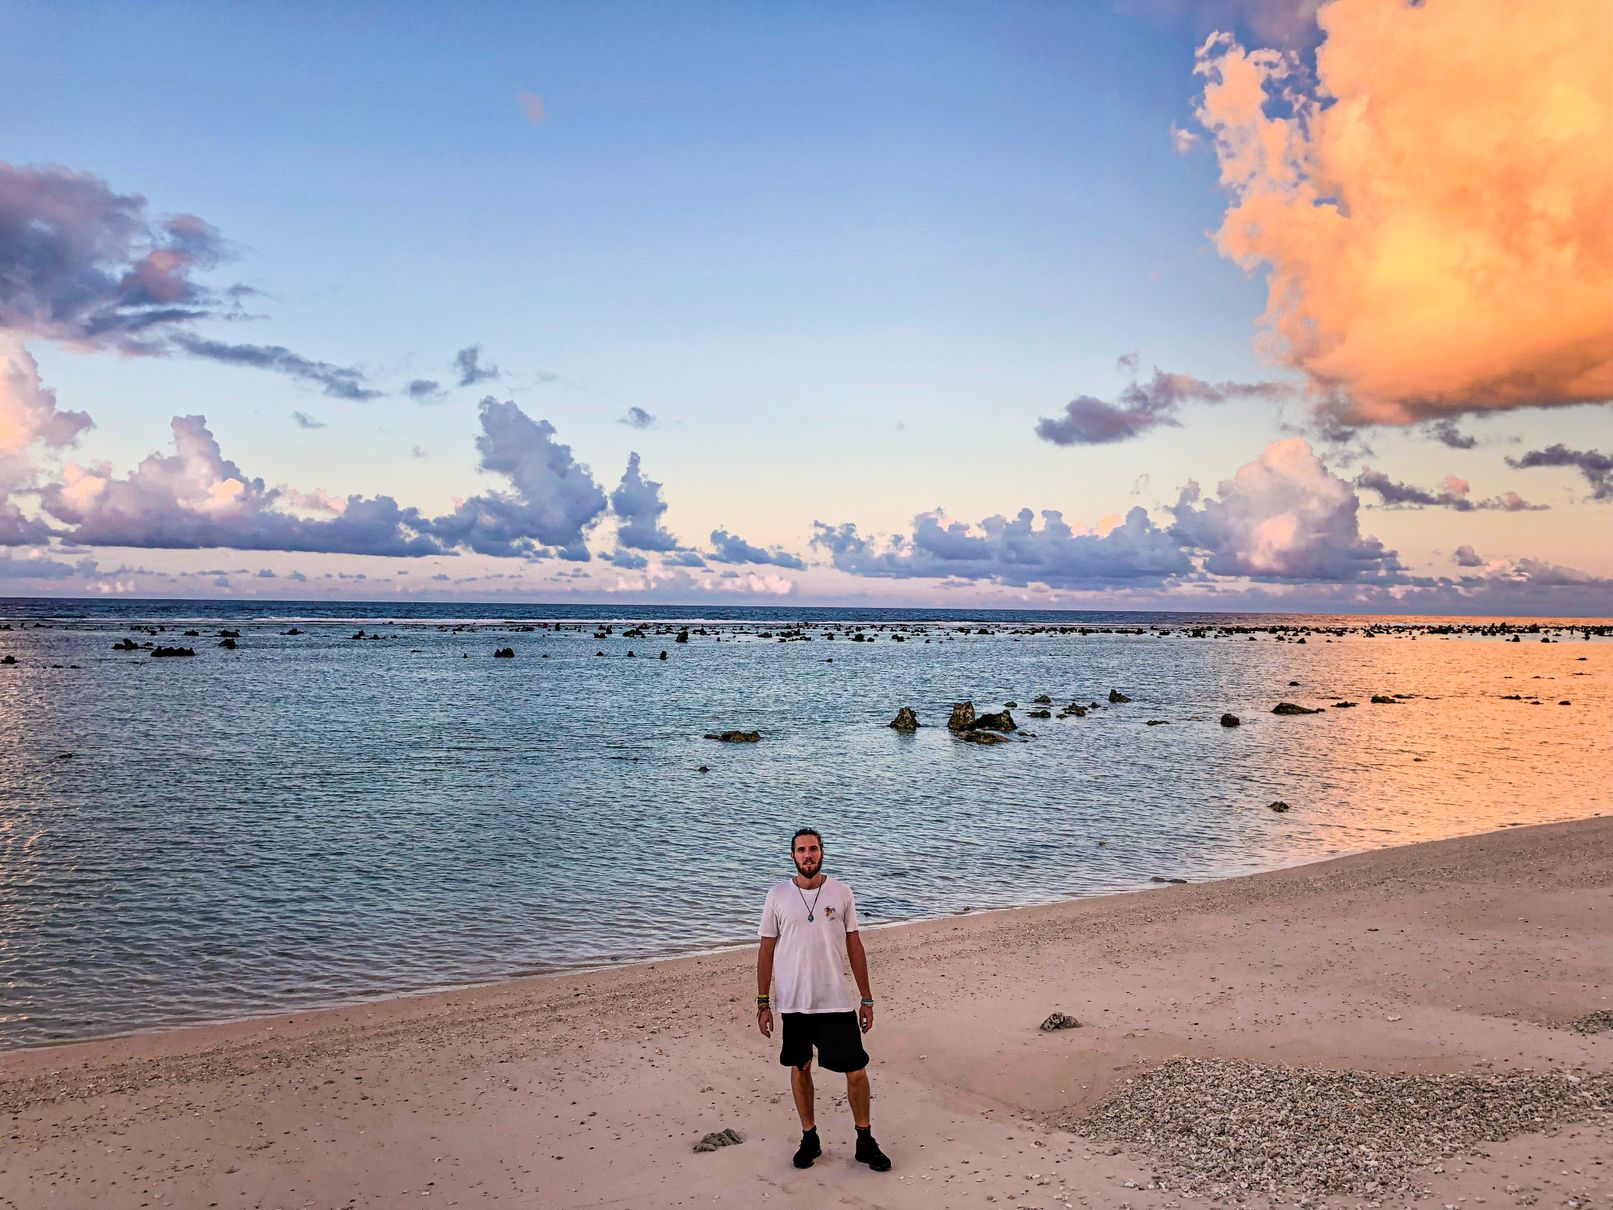 me on a beach in Nauru during sunset